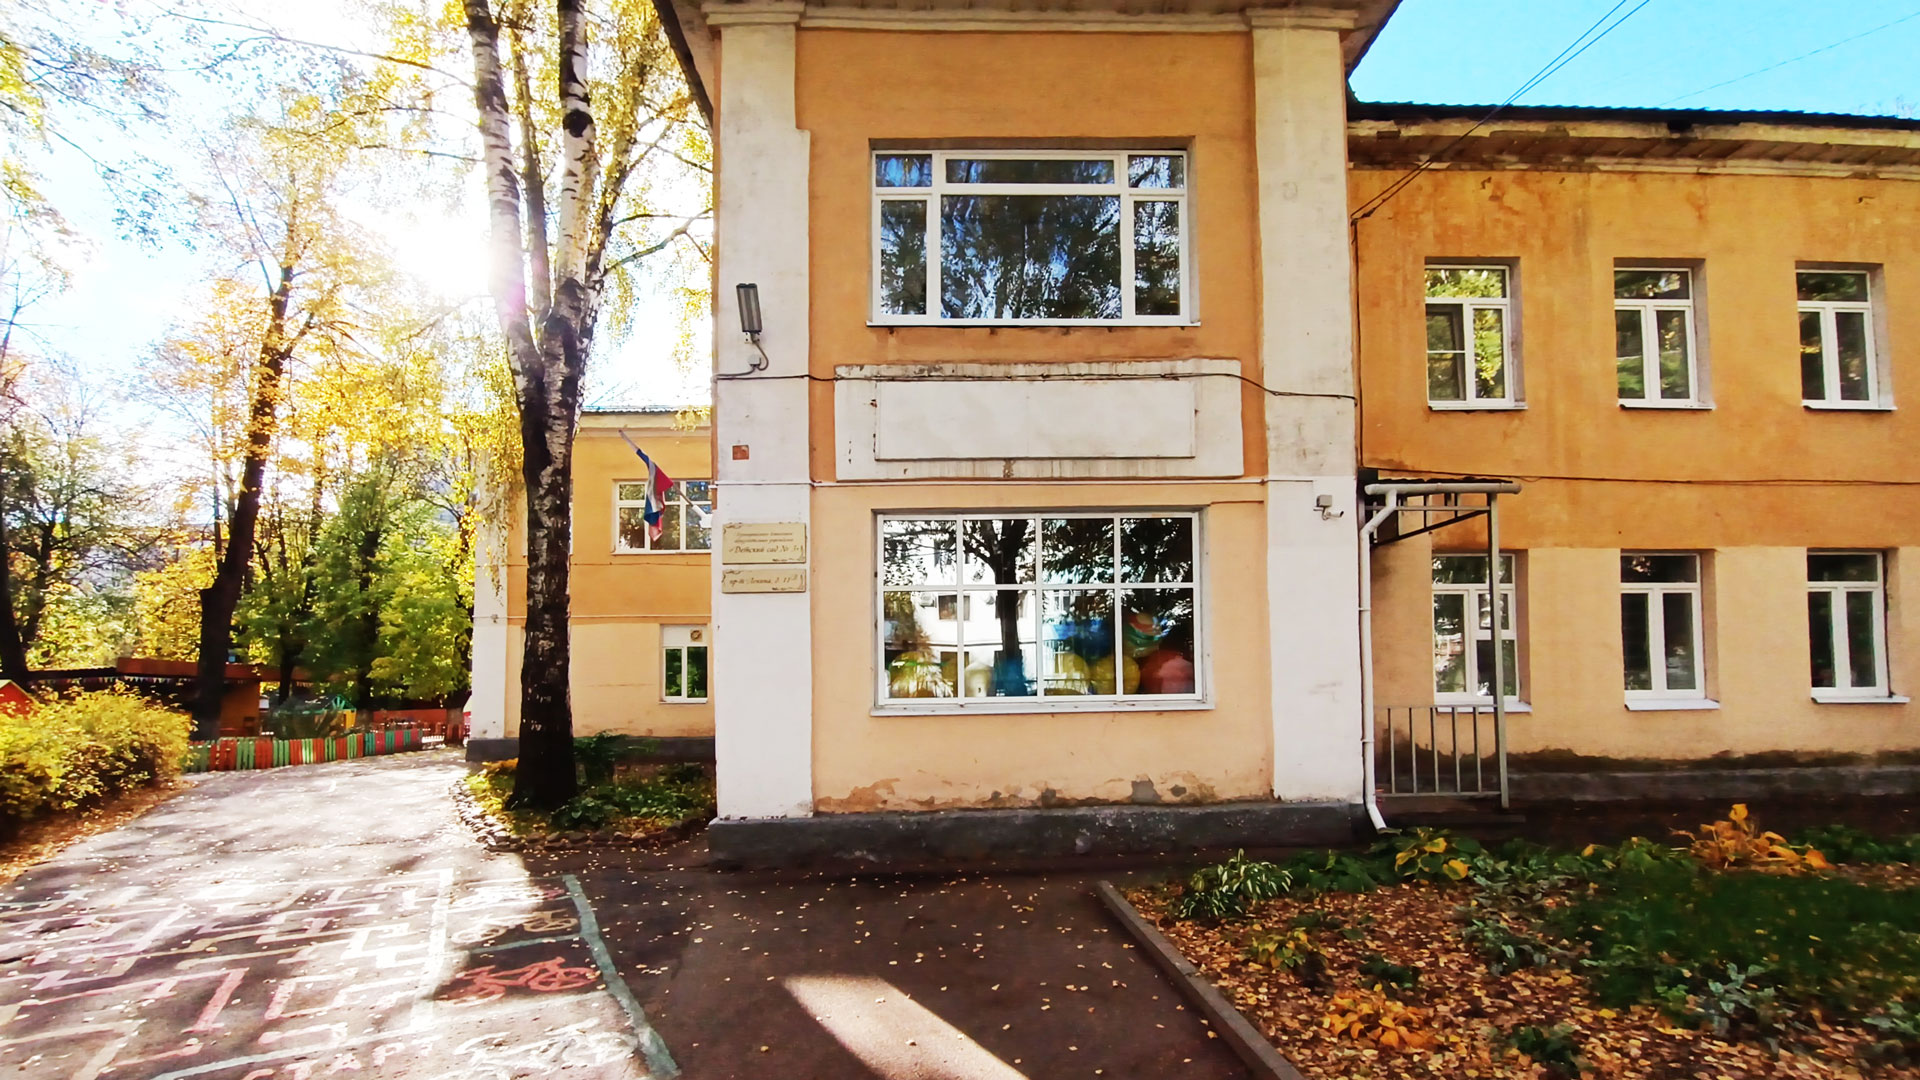 Детский сад 90 Ярославль: общий вид территории.